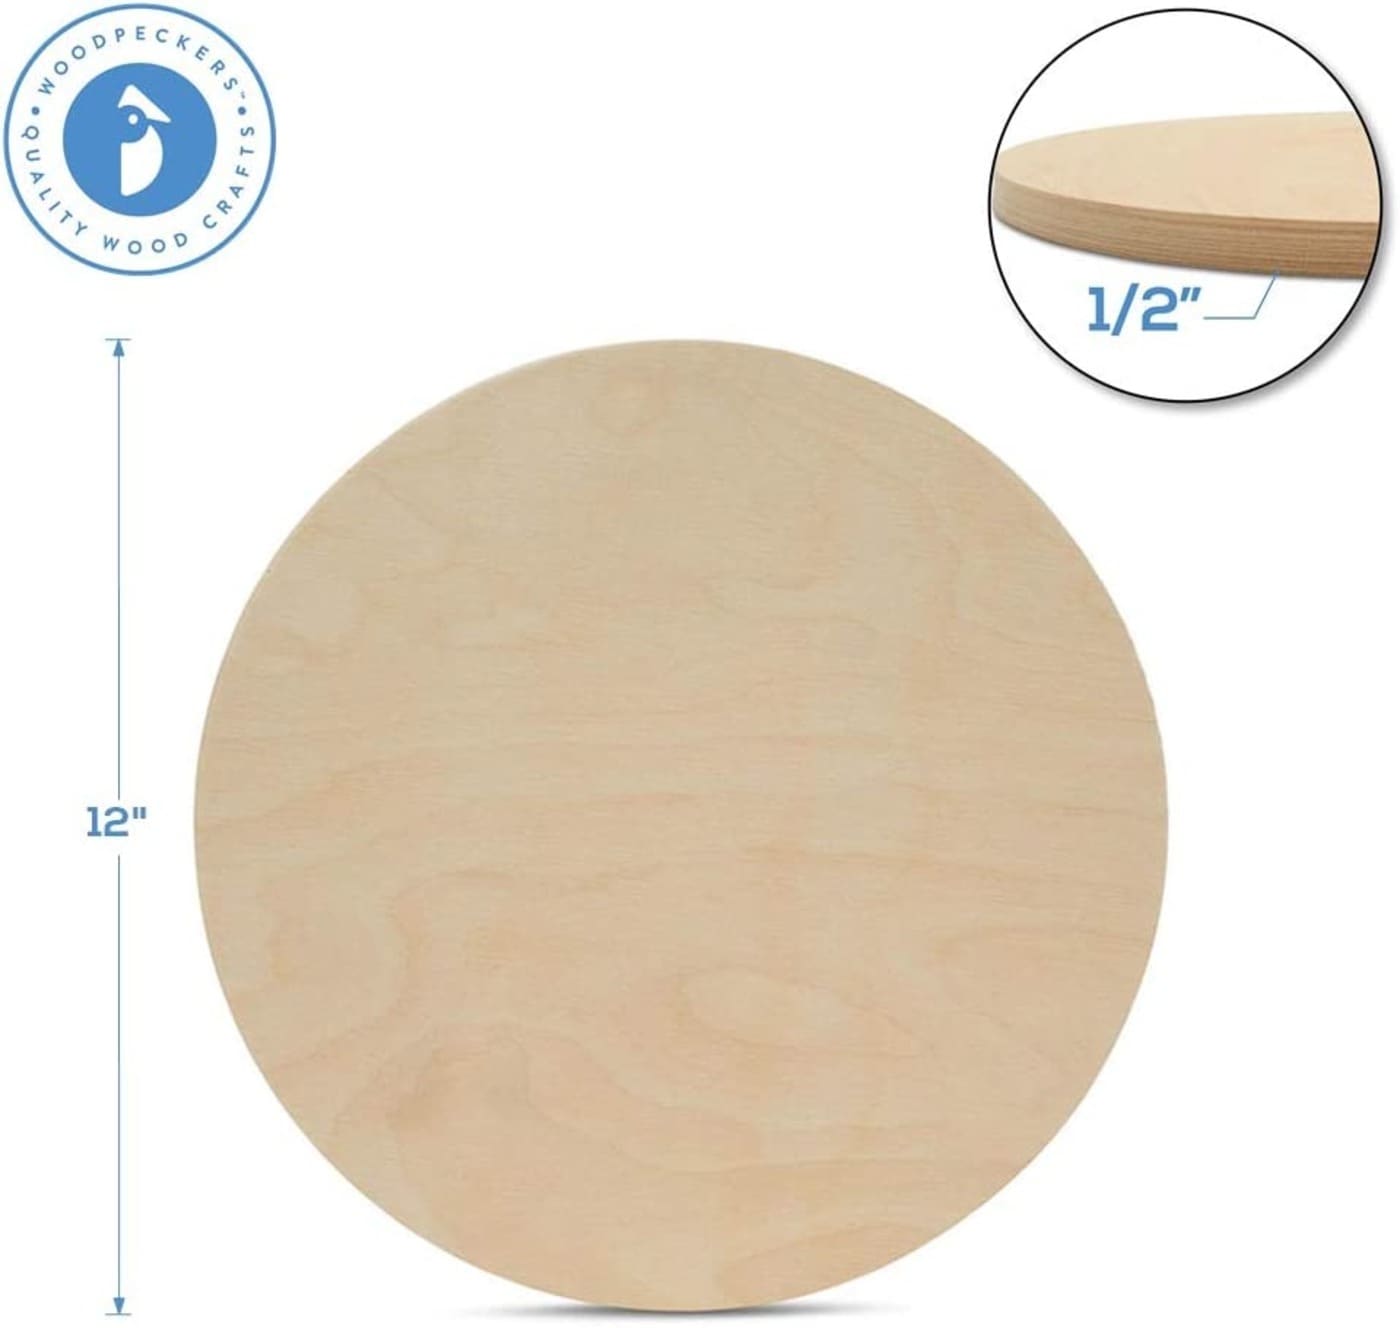  1 Pcs Premium Baltic Birch Plywood Circle 12 inch